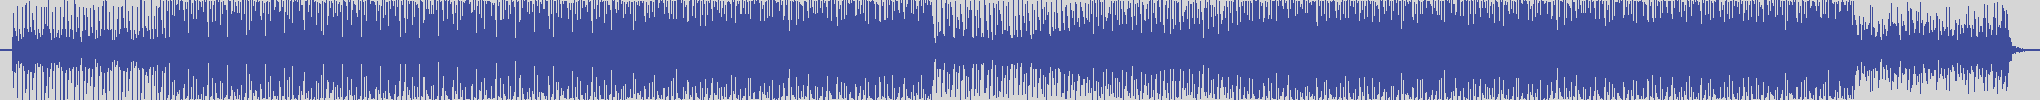 nf_boyz_records [NFY005] Poul Johansen - Timeless [House Elements Mix] audio wave form